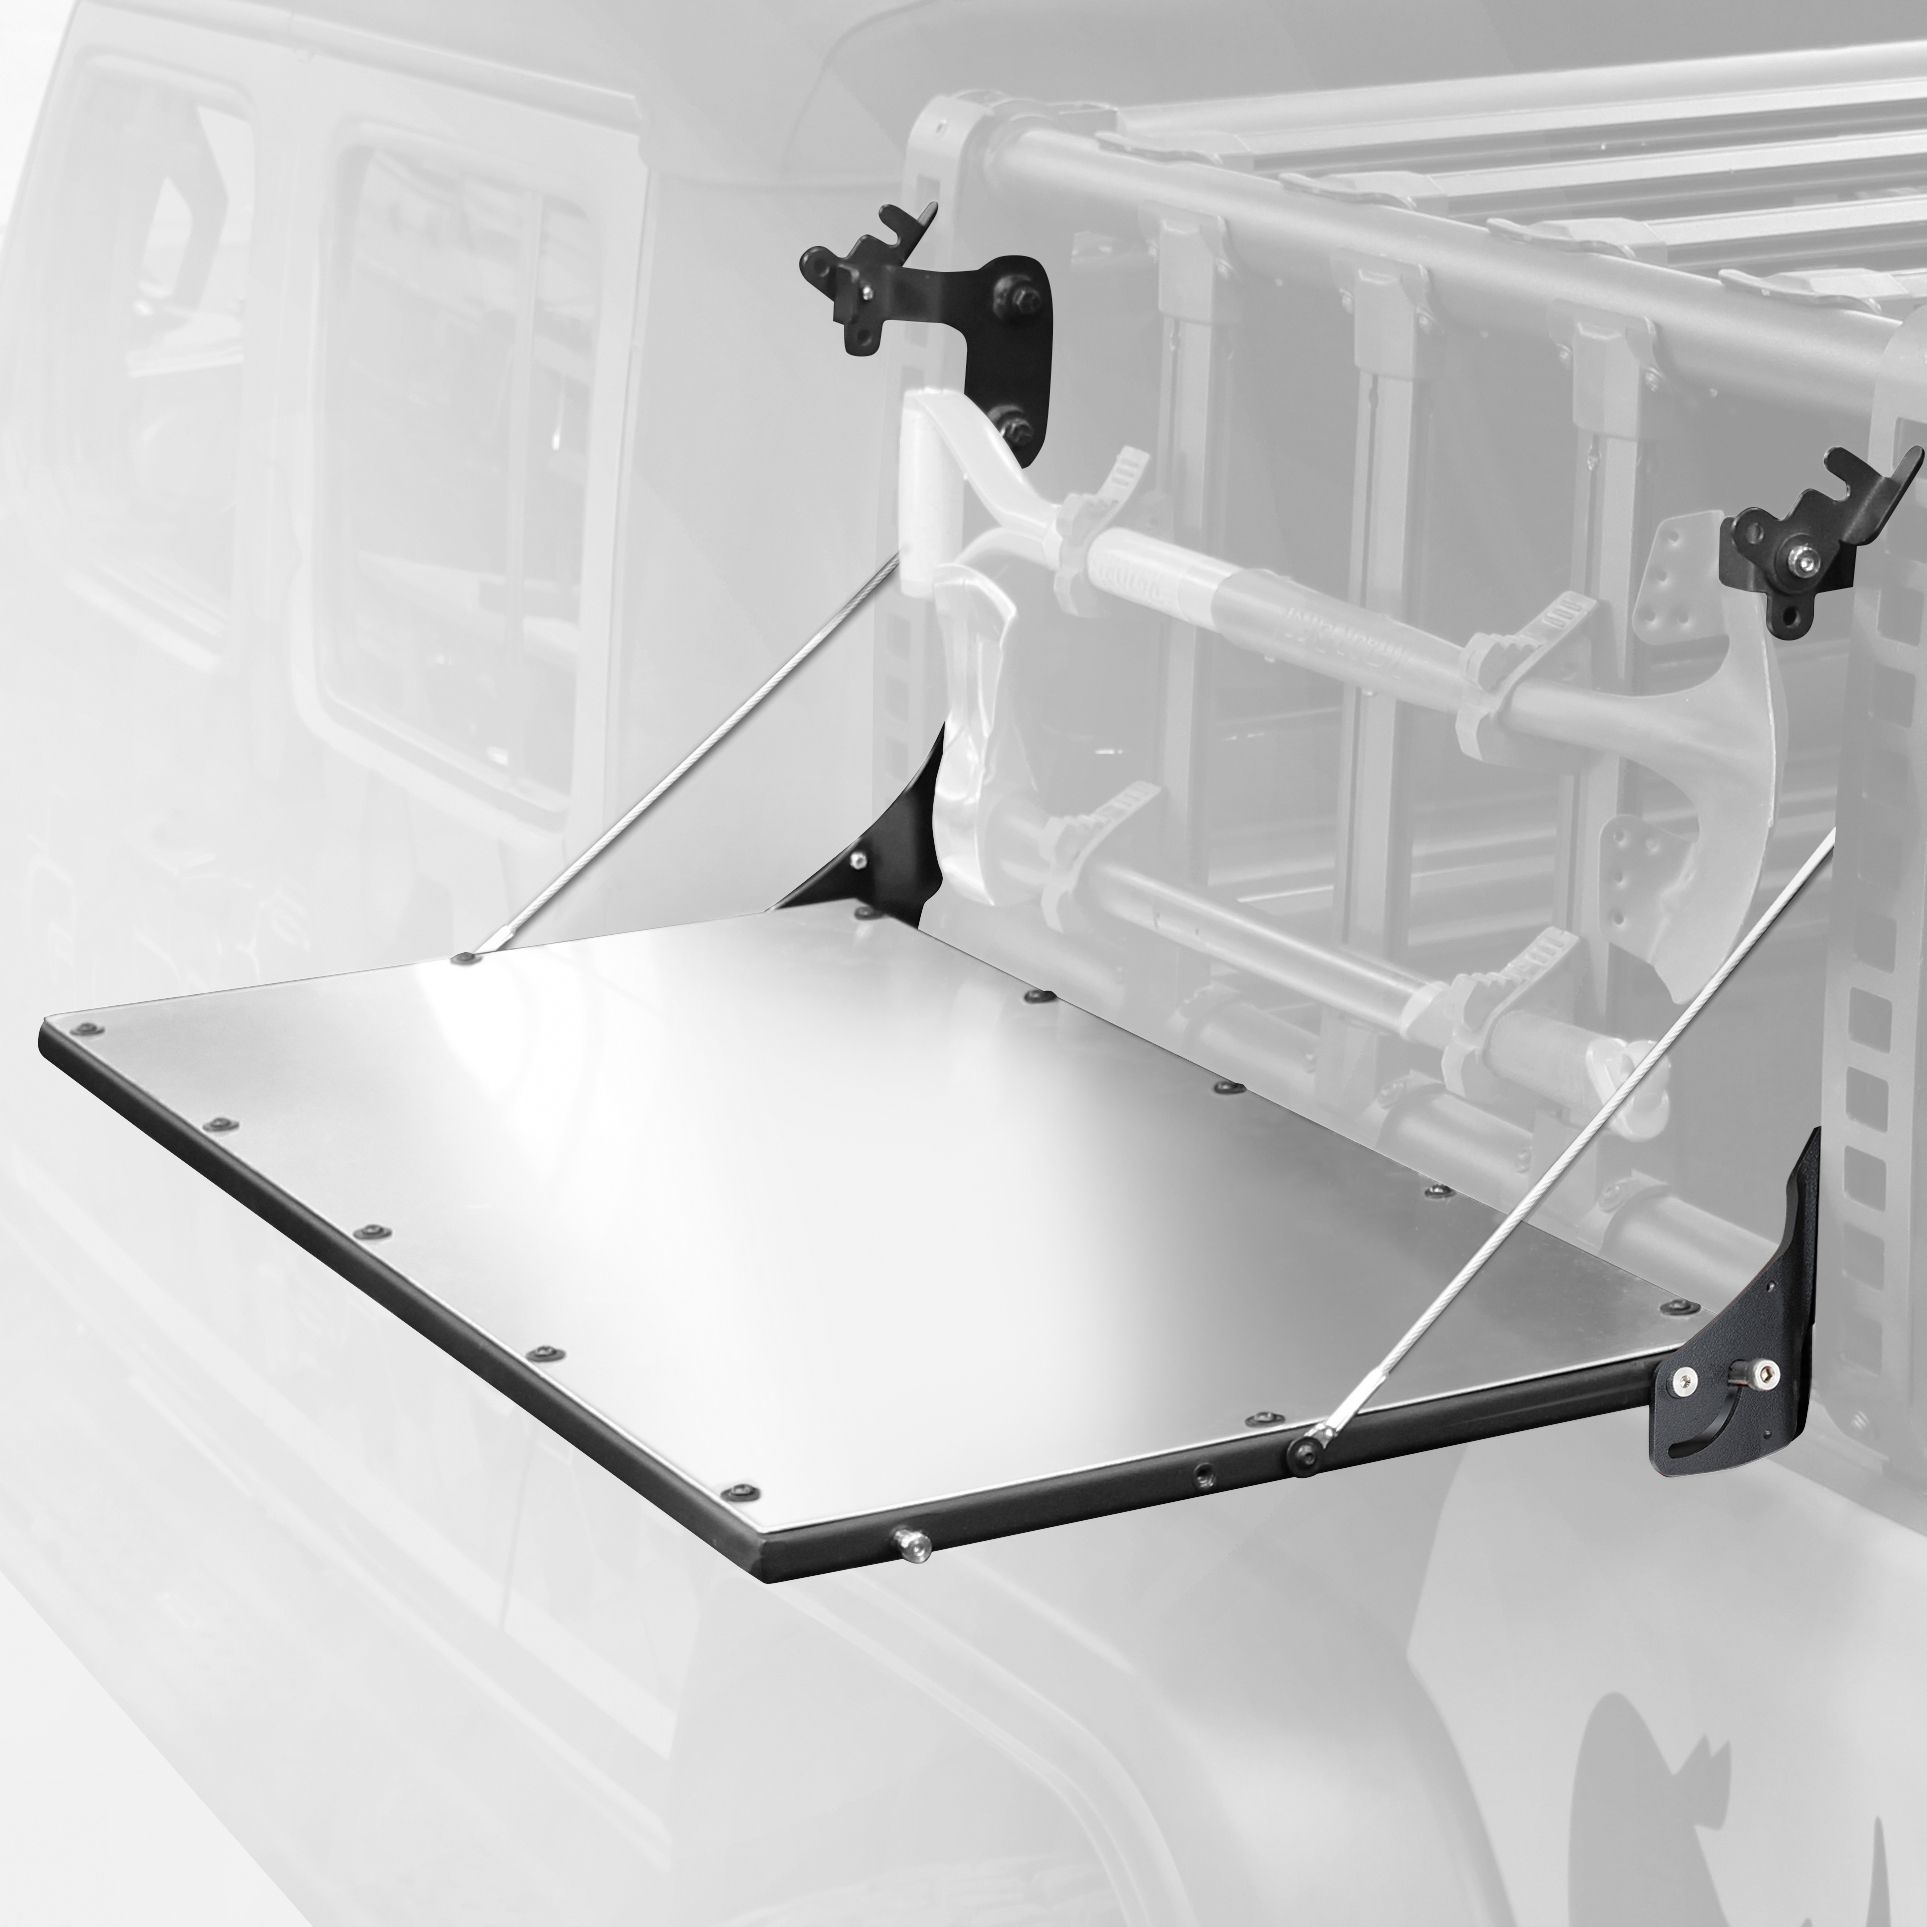 Go Rhino 5950110T - XRS Accessory Gear Table - Midsize Truck - Textured Black